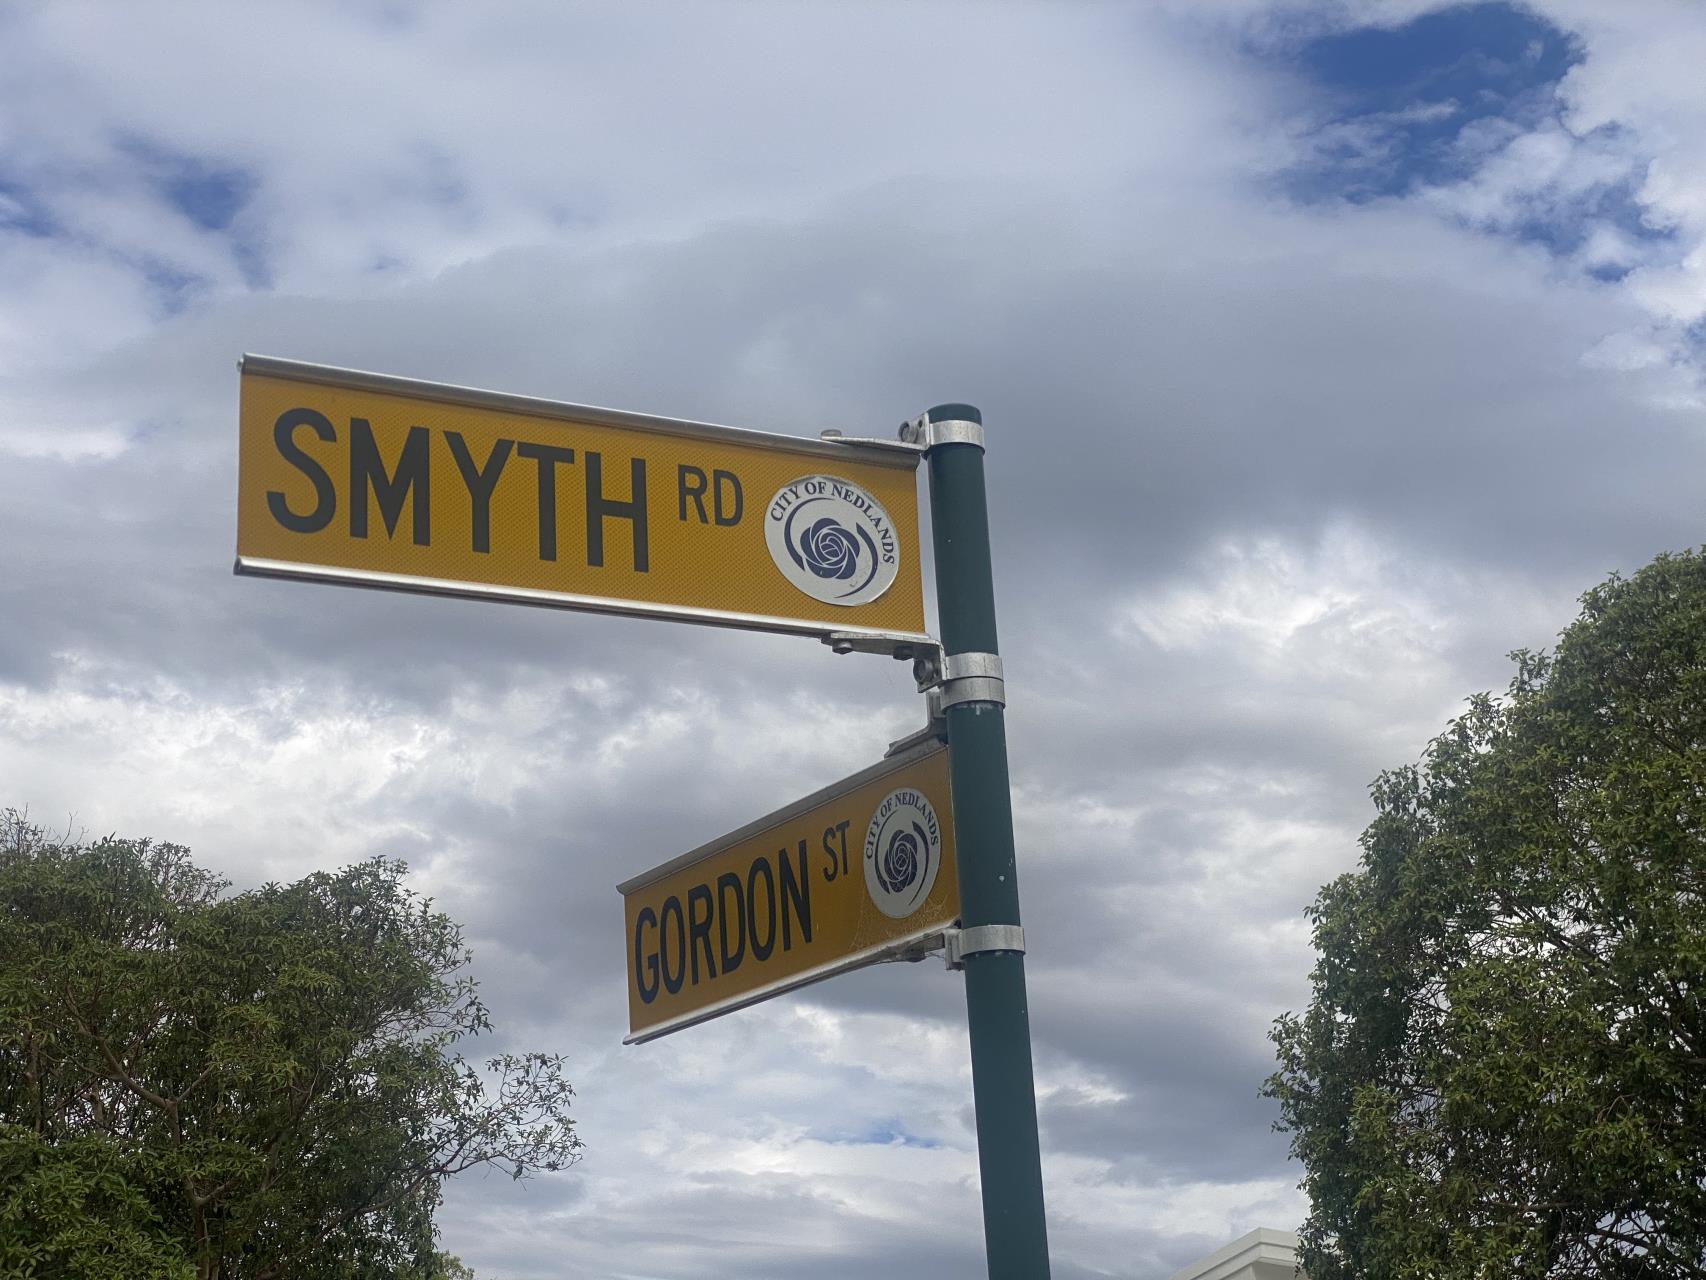 Smyth Road: Planned traffic disruptions, rehabilitation works